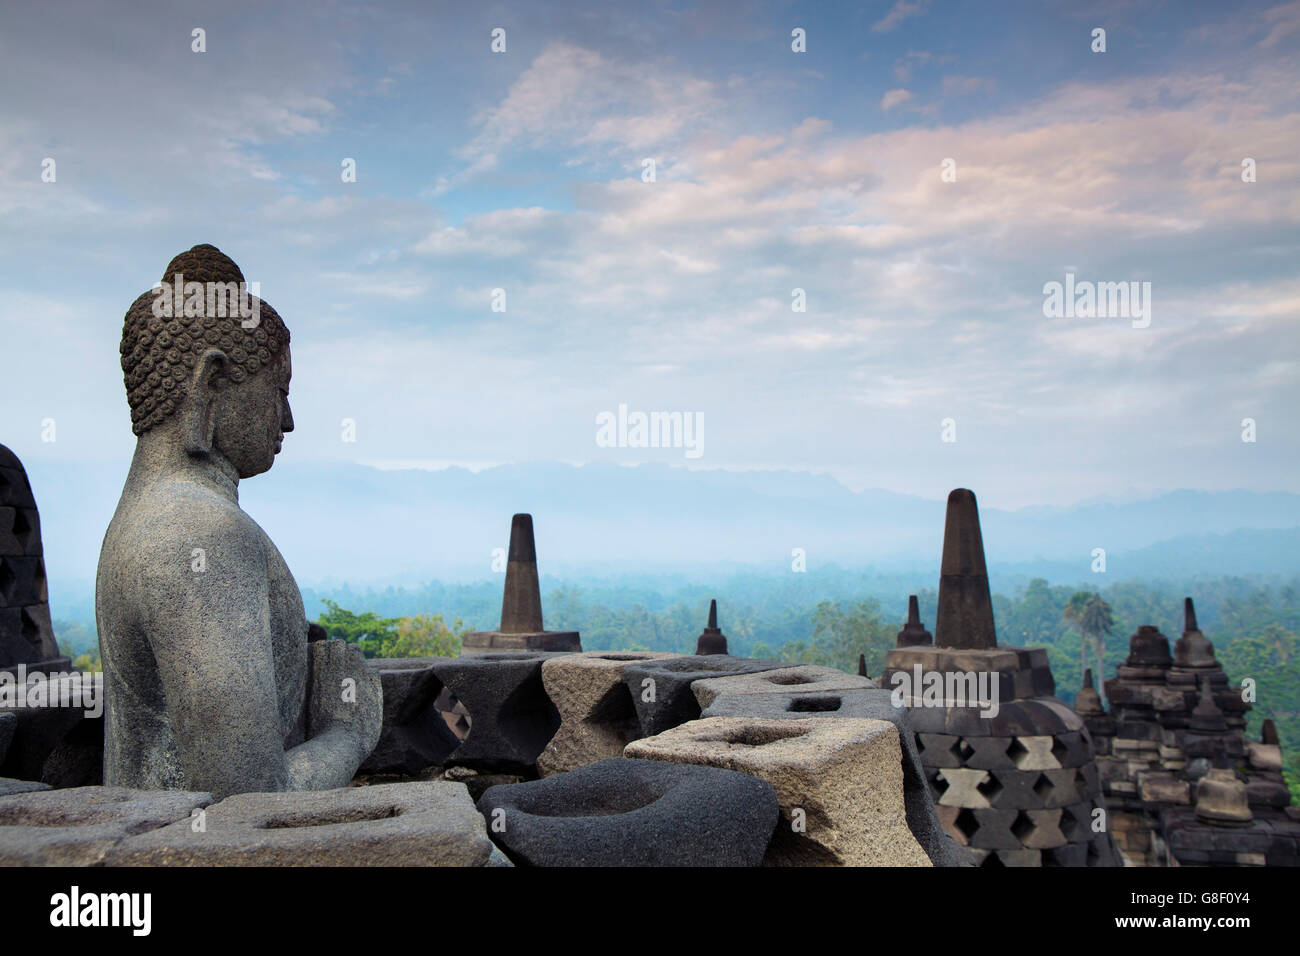 Borobudur-Weltkulturerbe, ein 9th-Jahrhundert-Mahayana-buddhistischer Tempel in Magelang, Zentral-Java, Indonesien Stockfoto